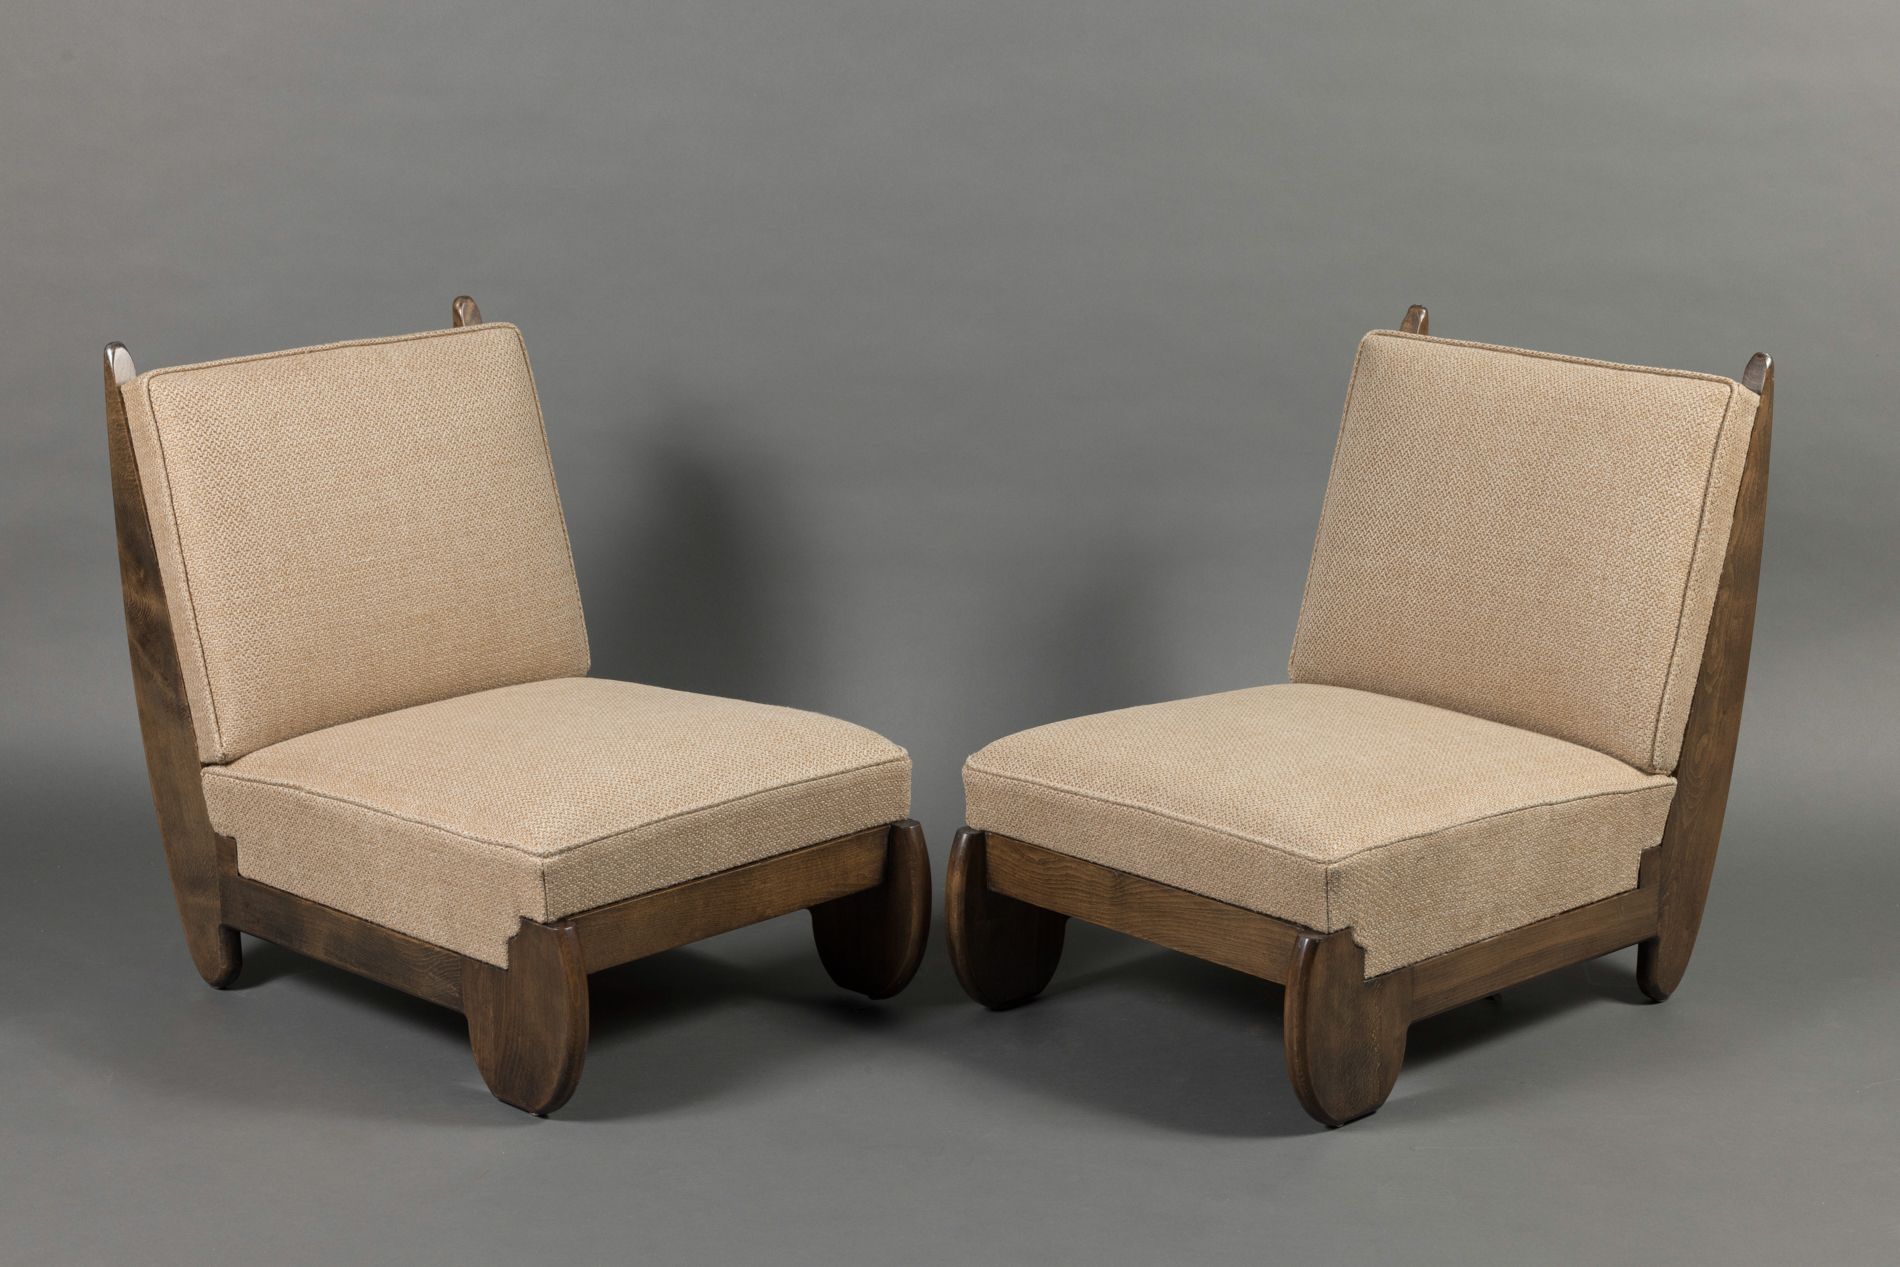 Null 保罗-拉斯洛 (1900-1993) 
一对染色的梧桐木扶手椅. 
斑驳的布艺椅面。
尺寸：69 x 49 x 68厘米